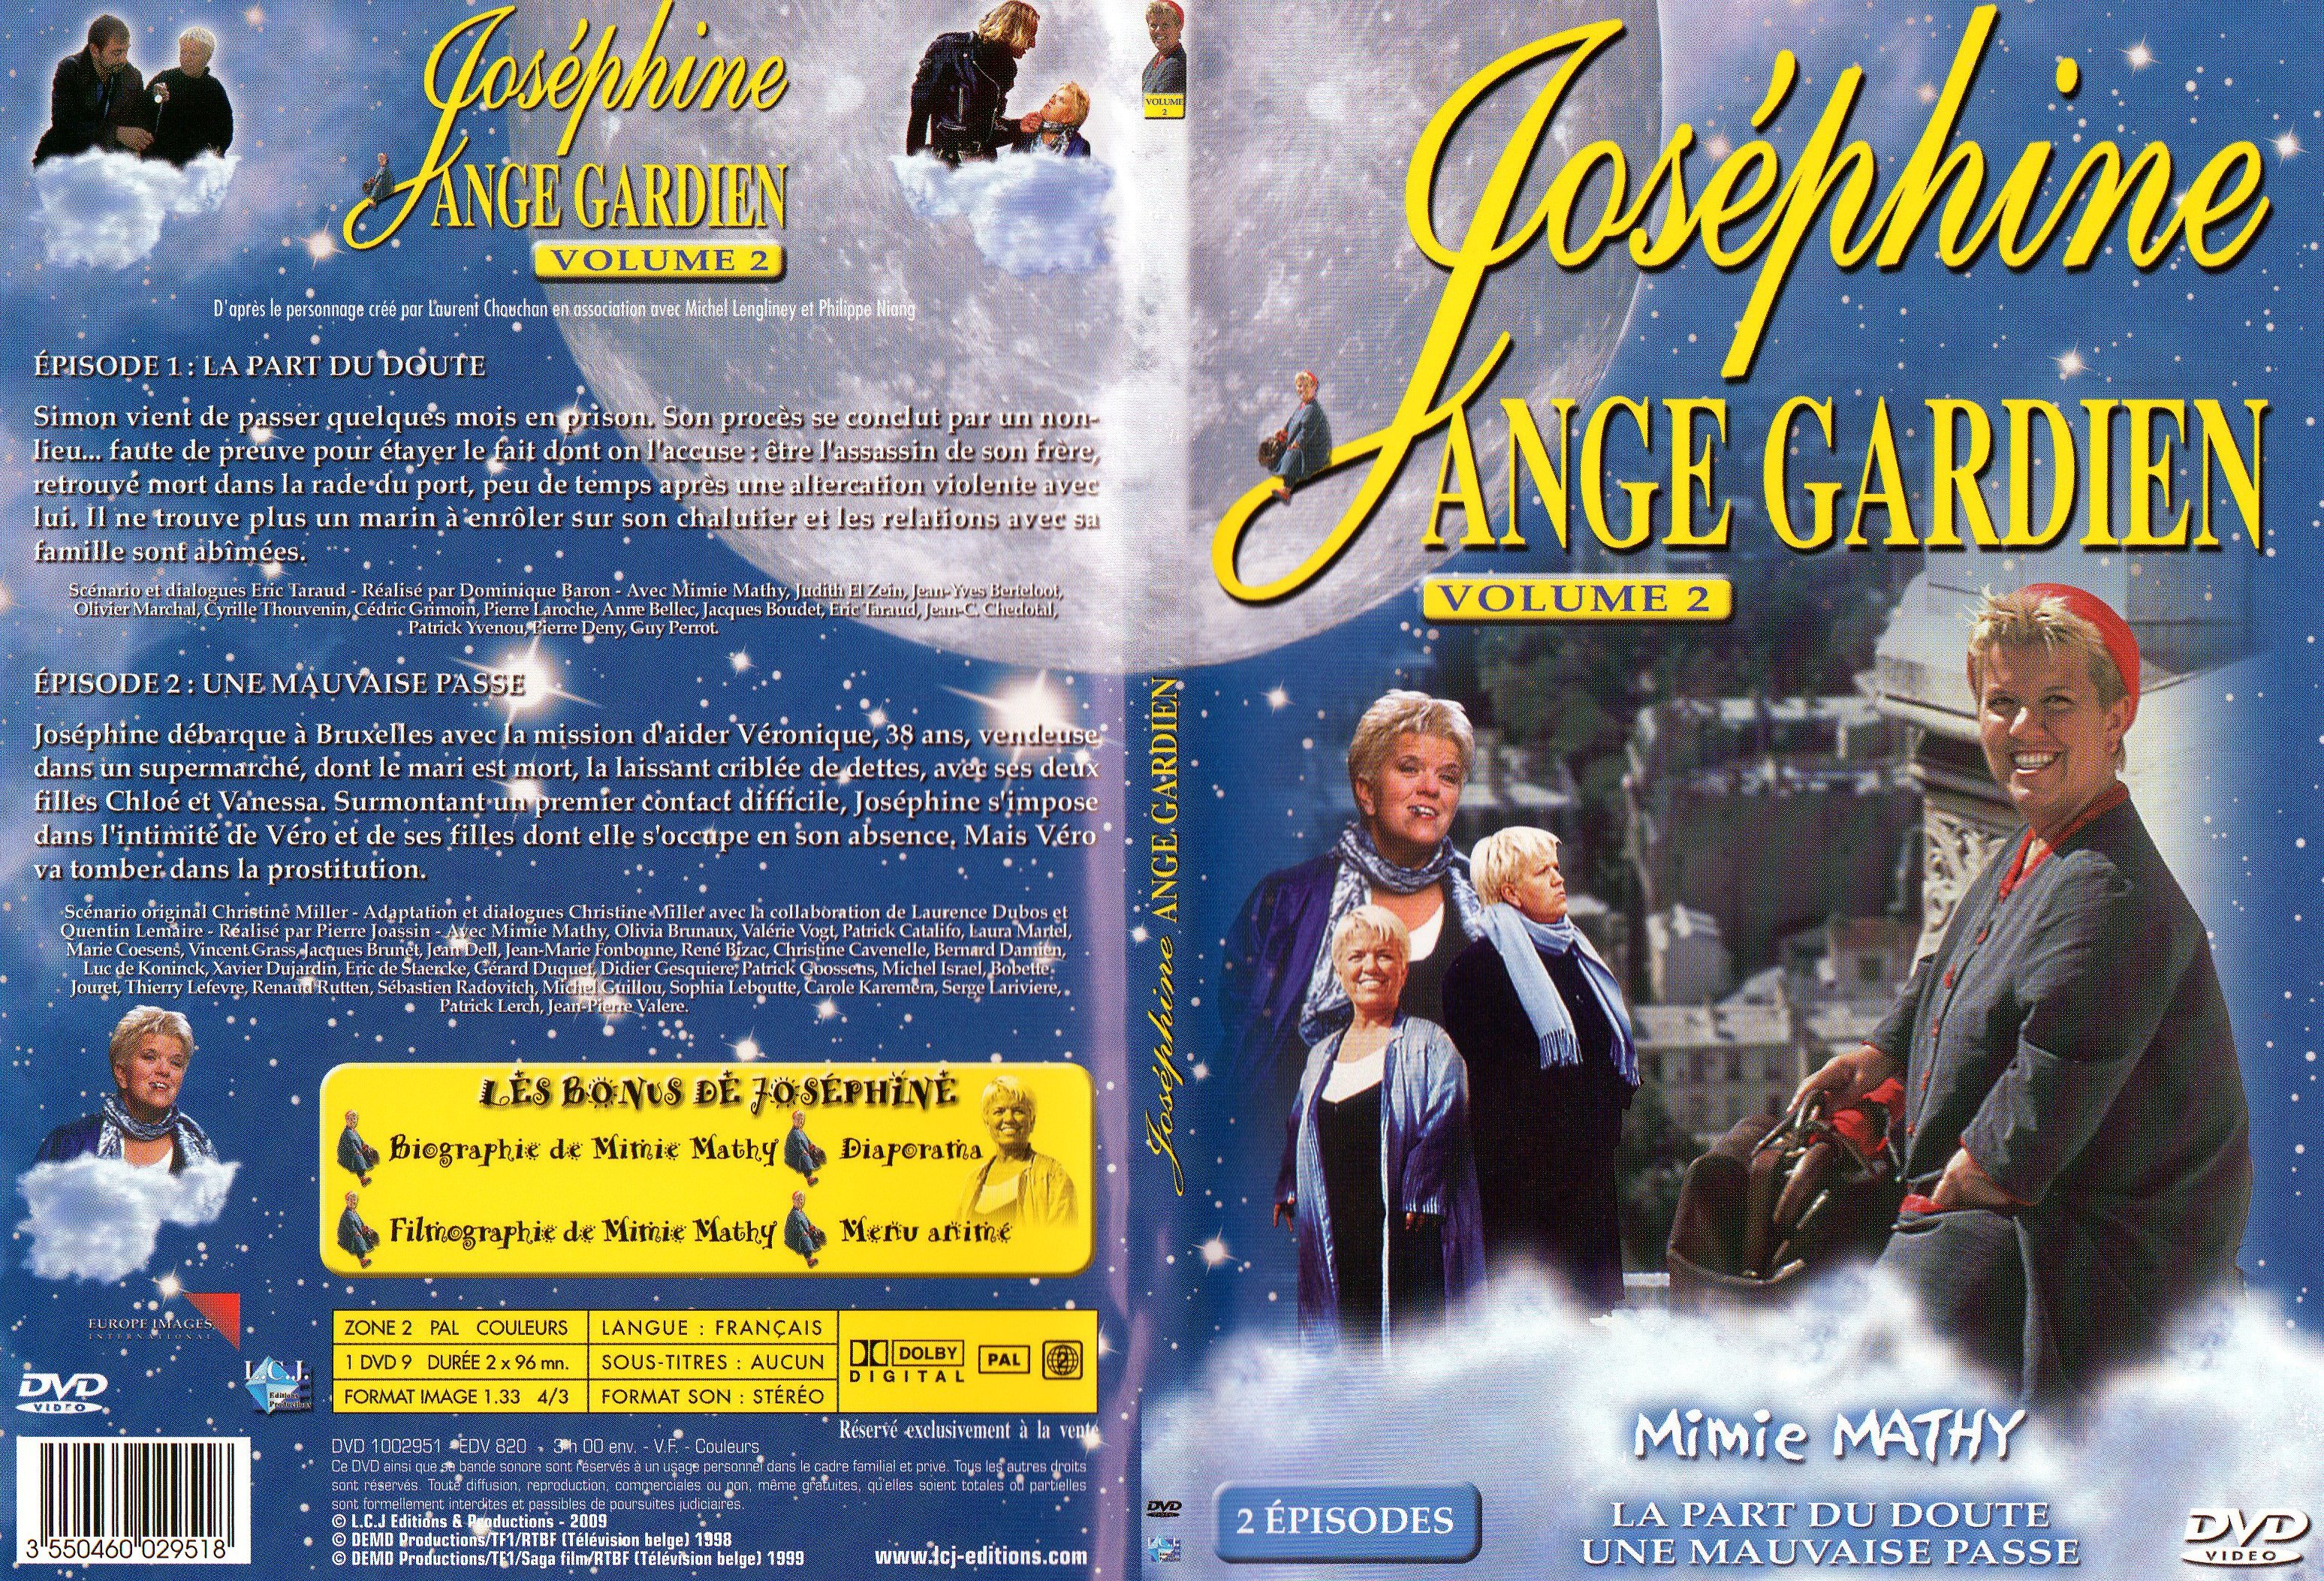 Jaquette DVD Josphine Ange Gardien saison 1 DVD 2